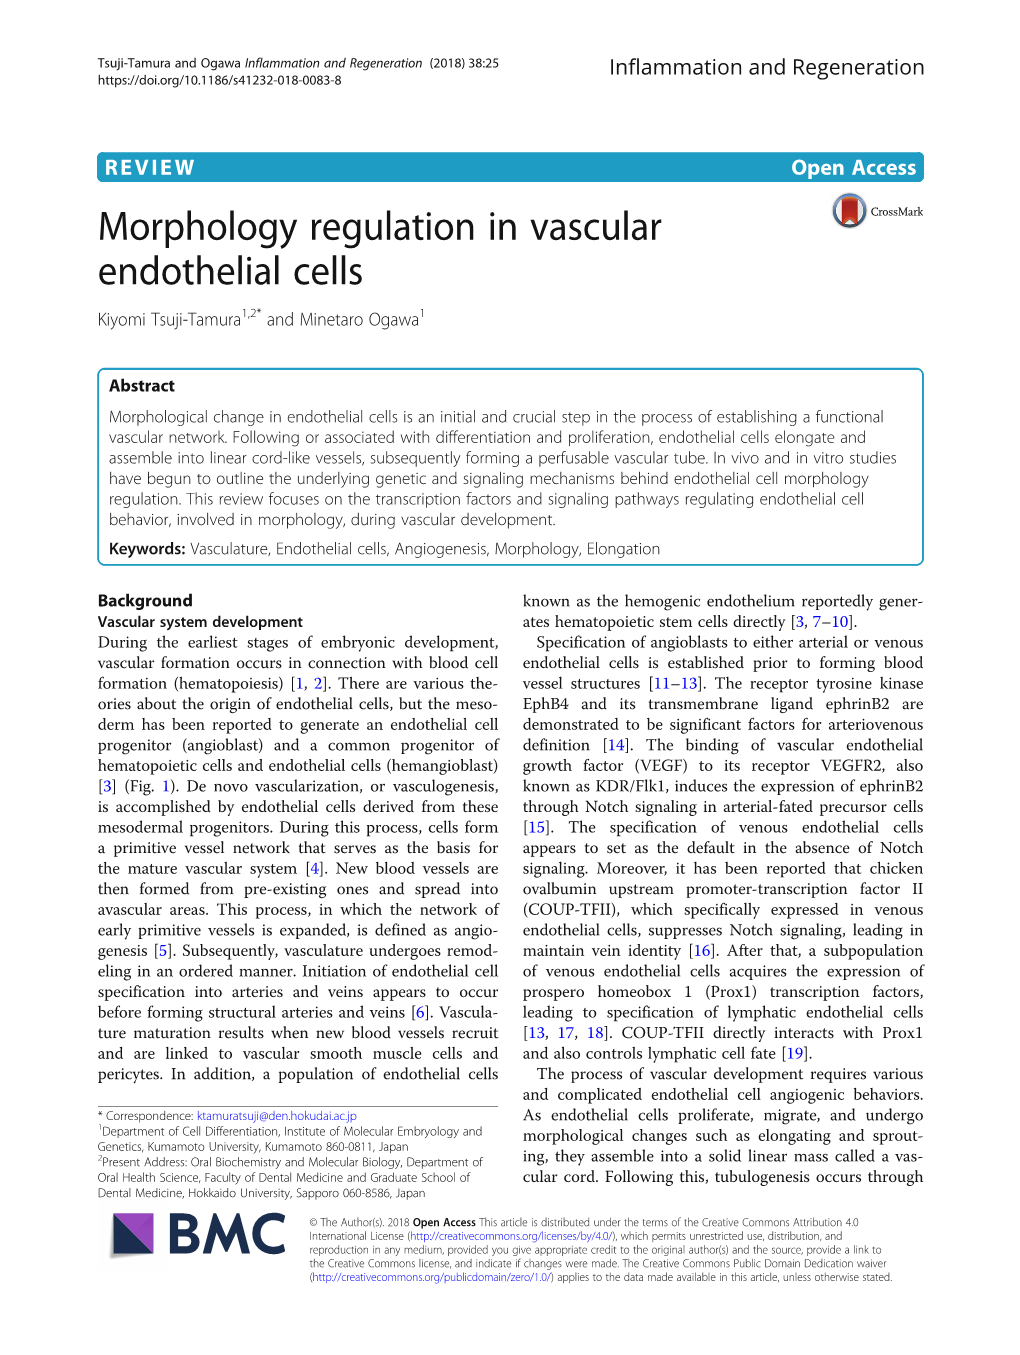 Morphology Regulation in Vascular Endothelial Cells Kiyomi Tsuji-Tamura1,2* and Minetaro Ogawa1